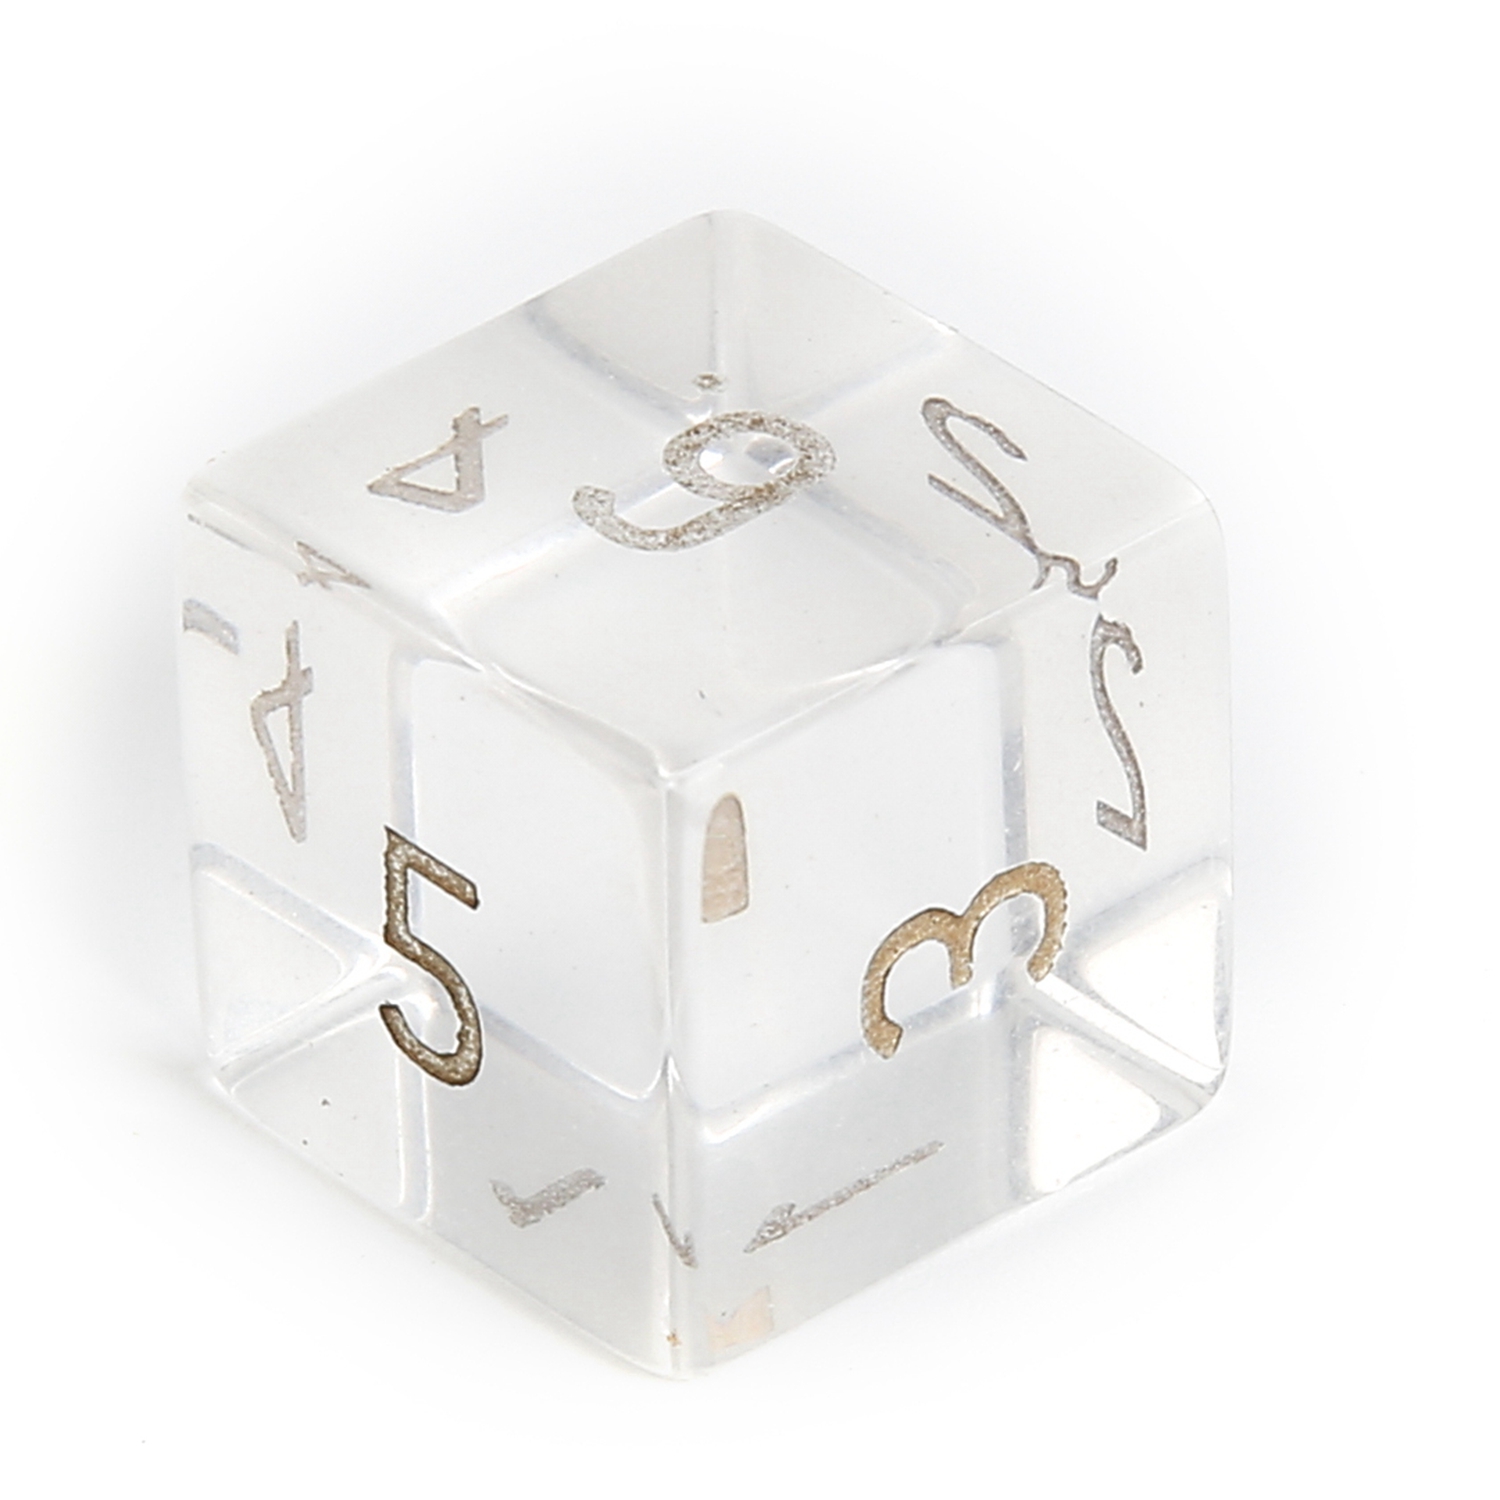 D6 icosahedron